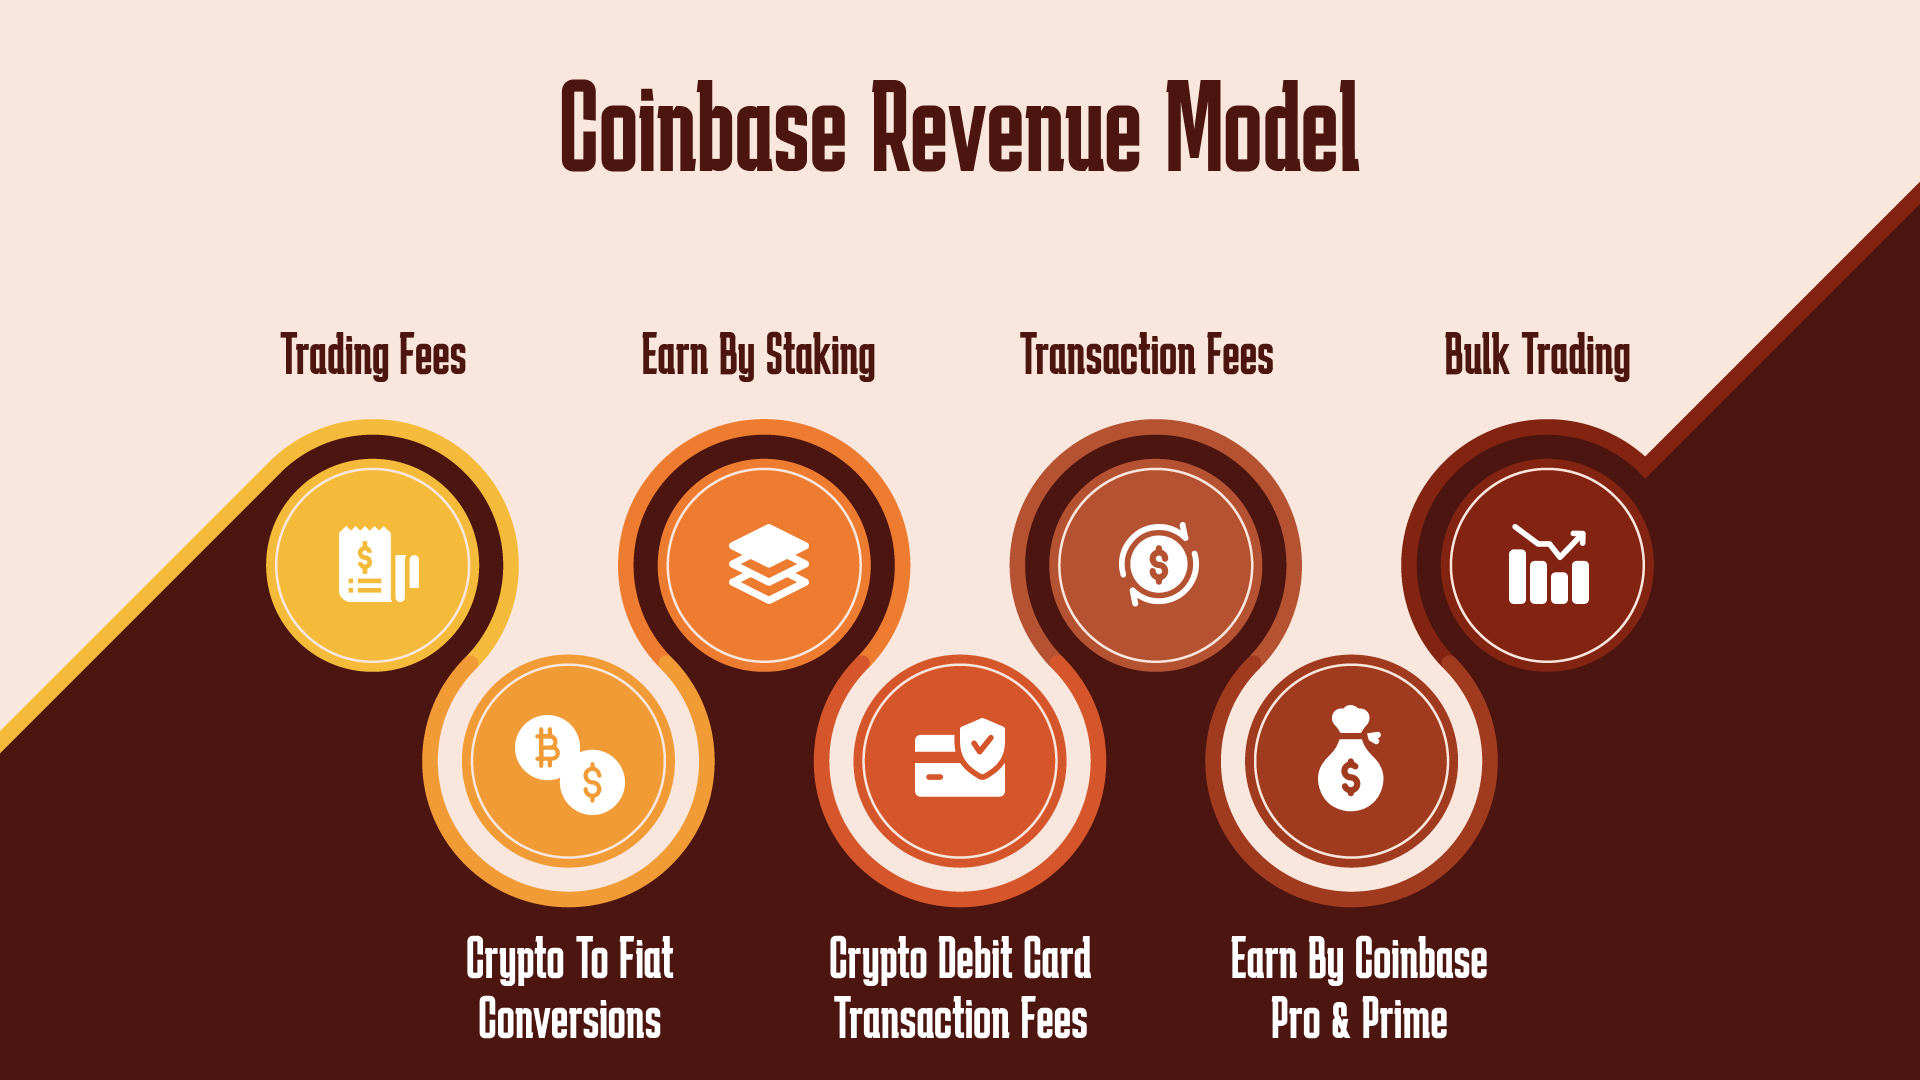 How Does Coinbase Make Money? Business Revenue Explained